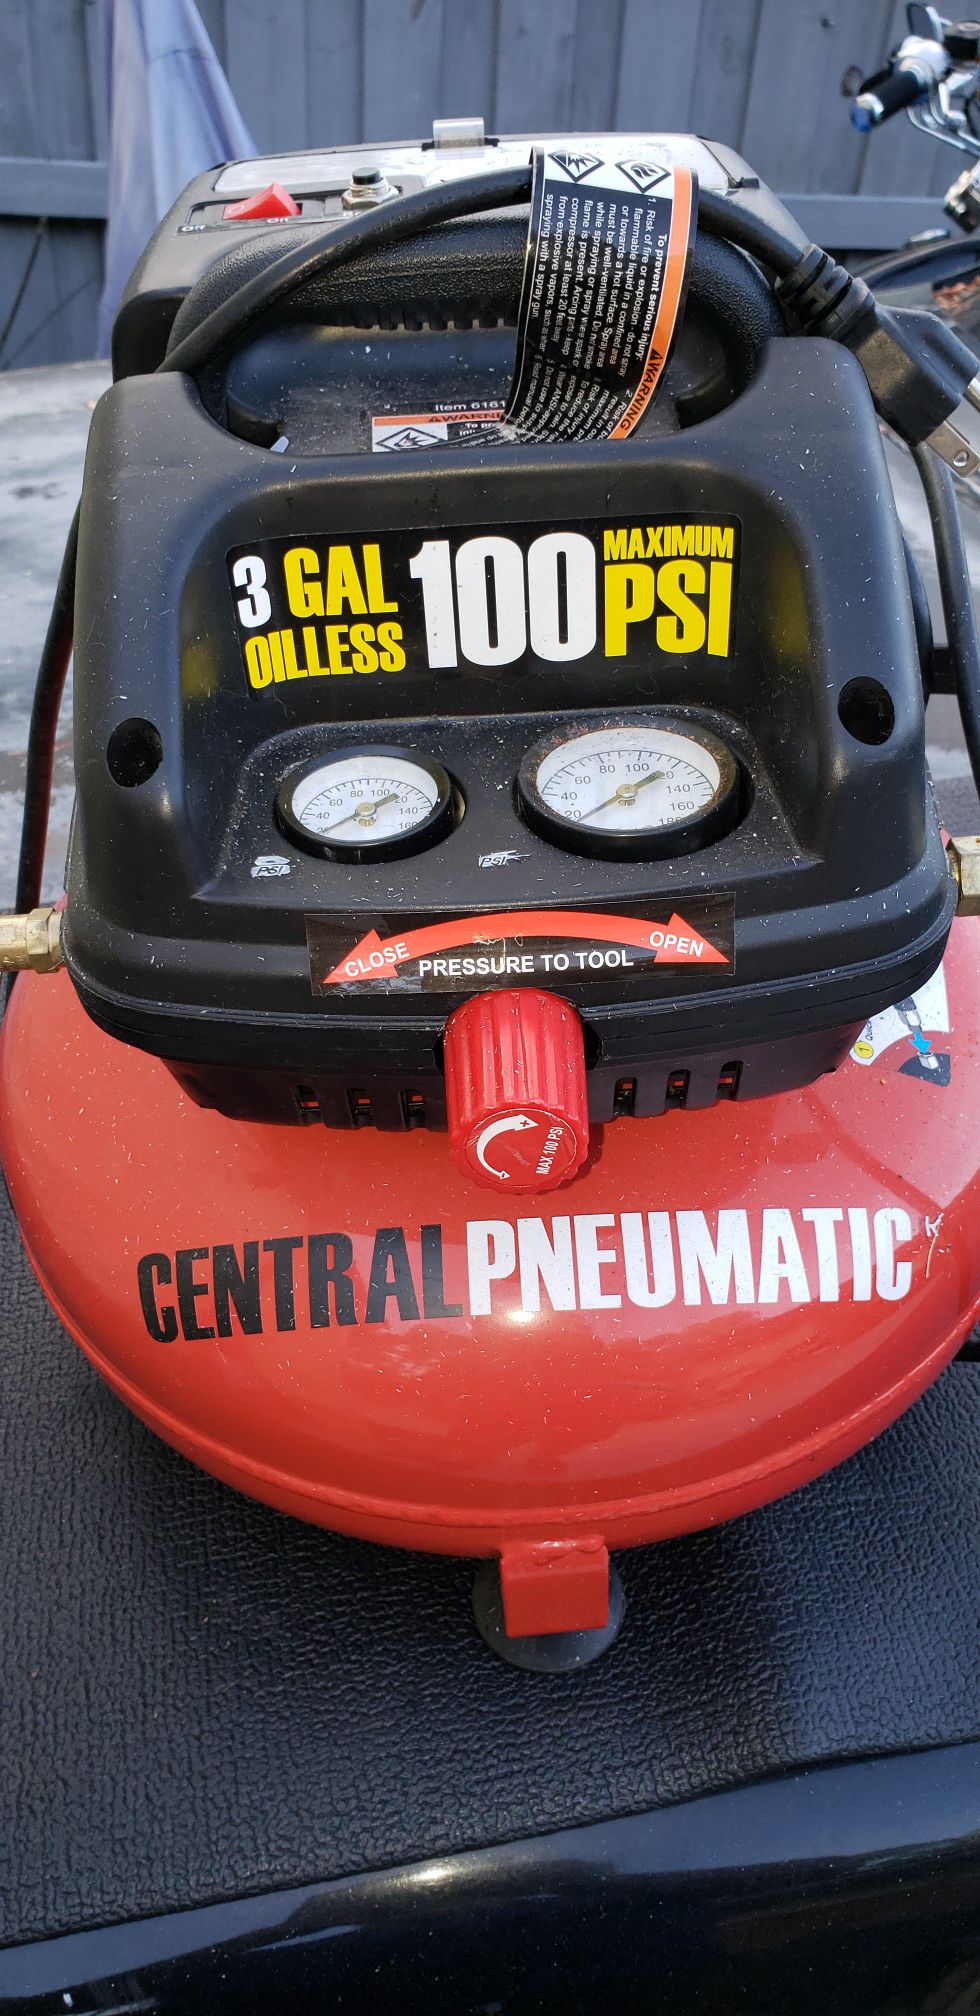 Central Pneumatic 100 PSI compressor